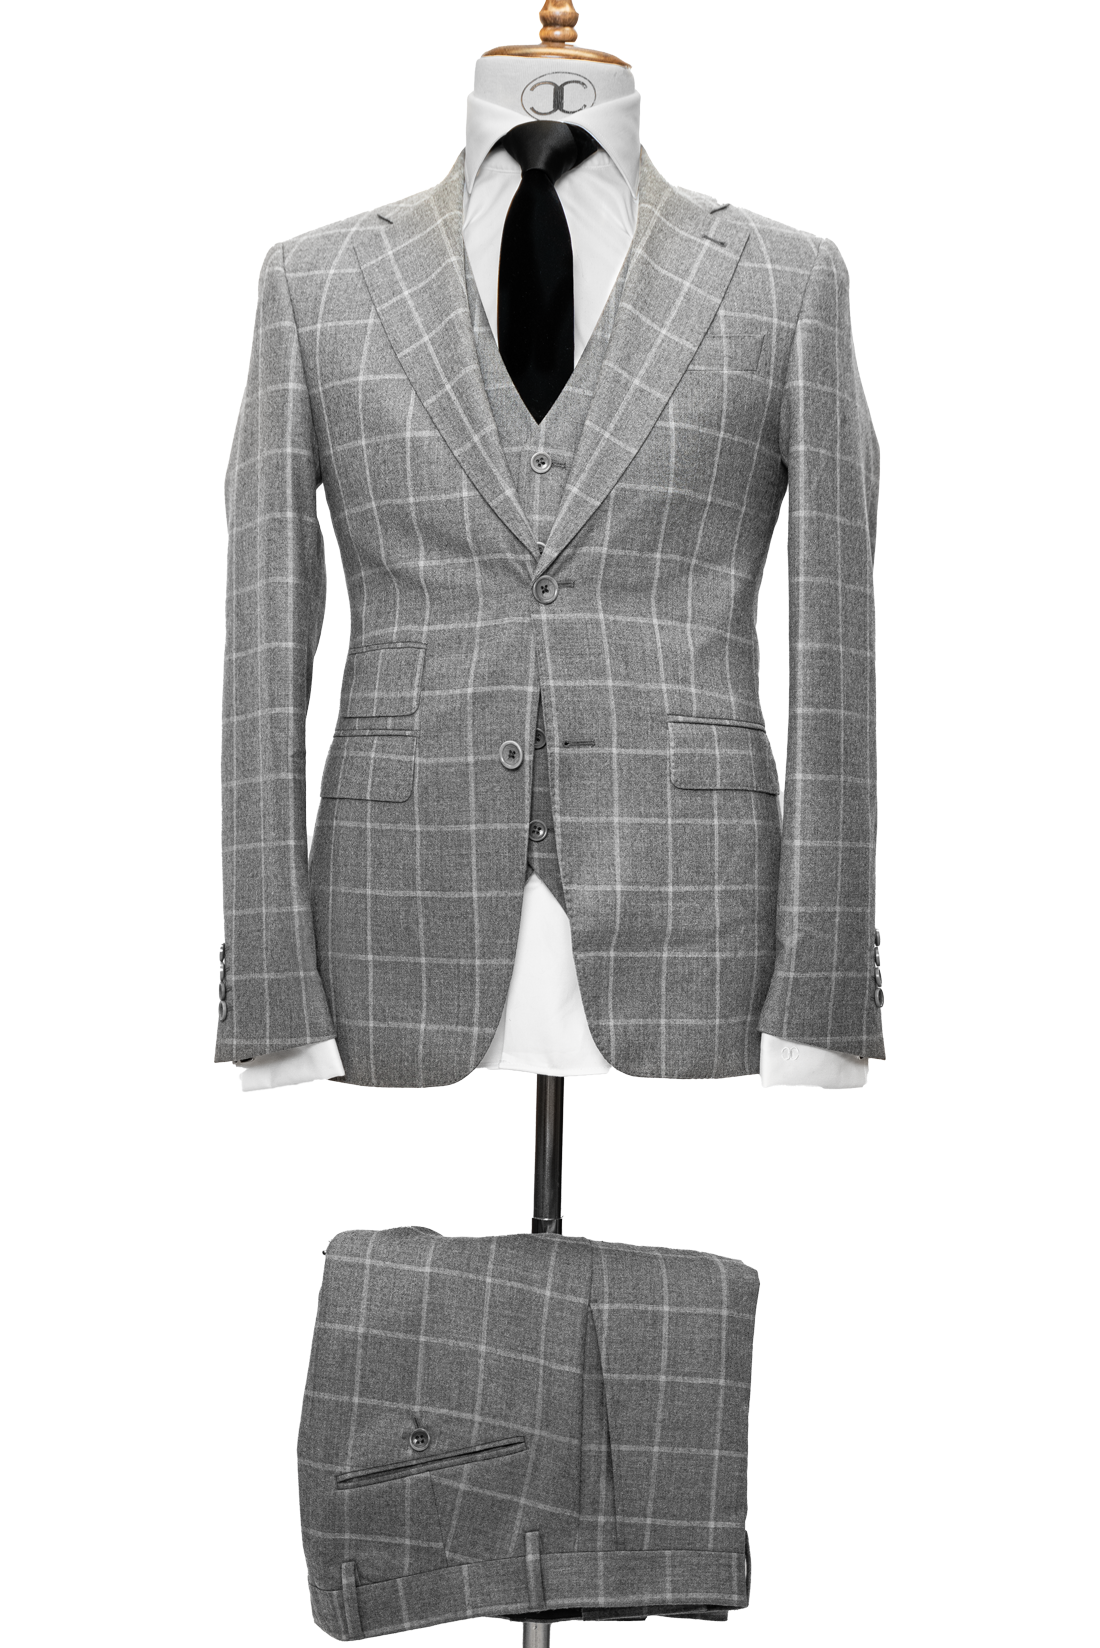 Zignone - Ash Grey with Chalk windowpane cashmere 3-piece slim fit suit